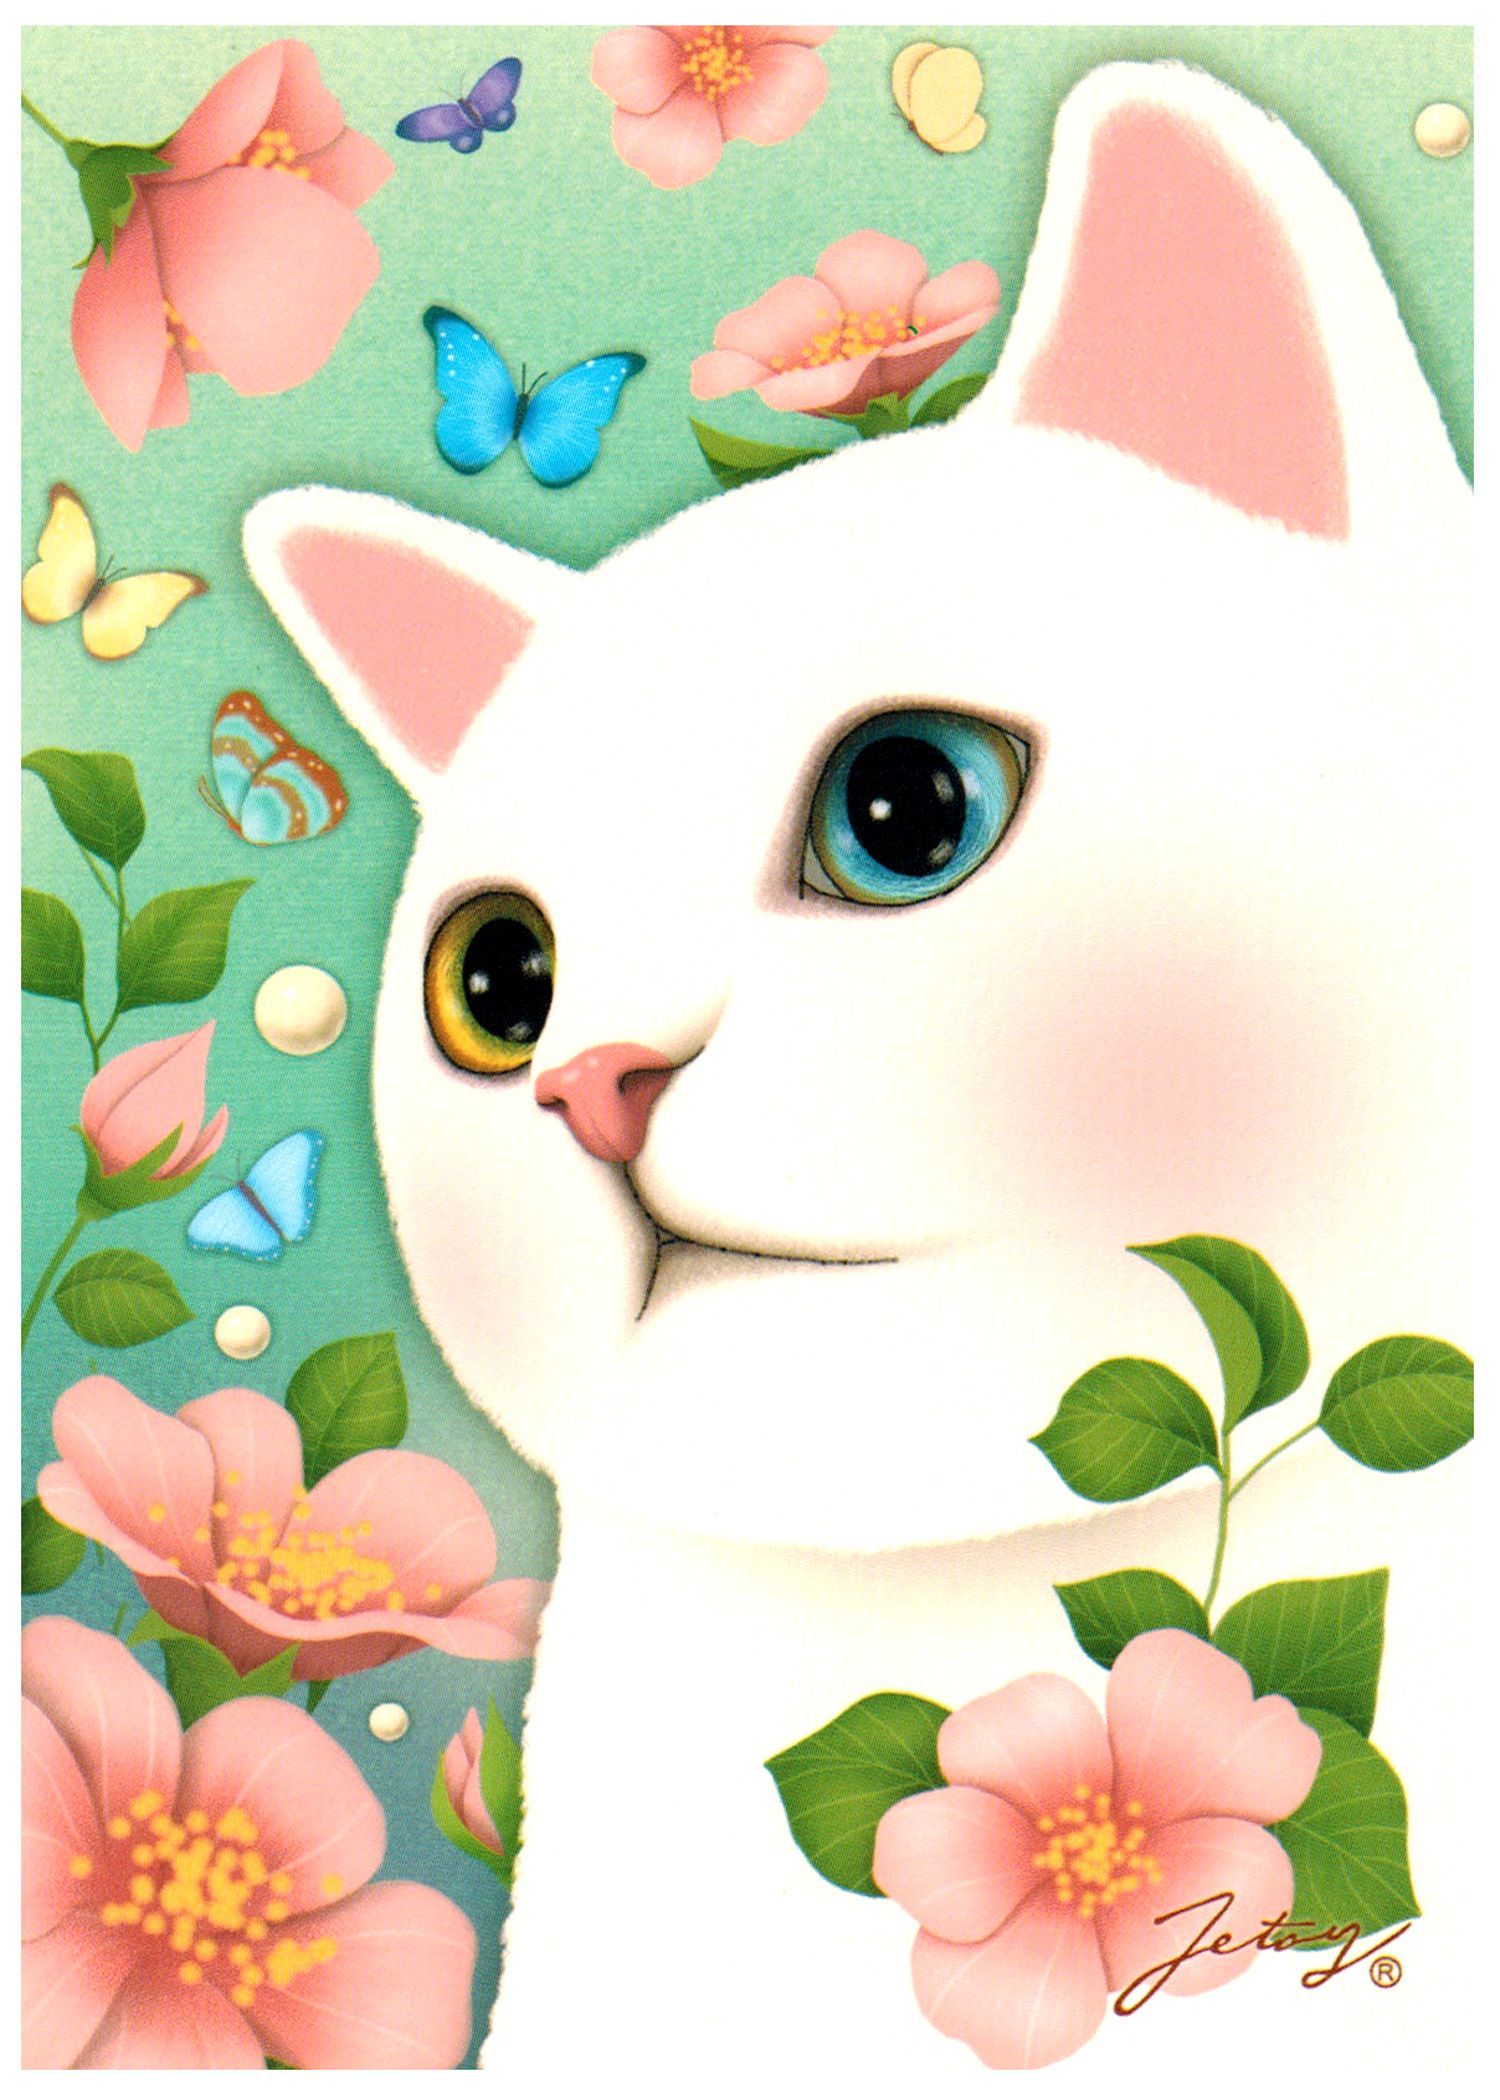 Jetoy Choo Choo Cat Postcard: Vintage Flower. Cat artwork, Cat painting, Cats illustration